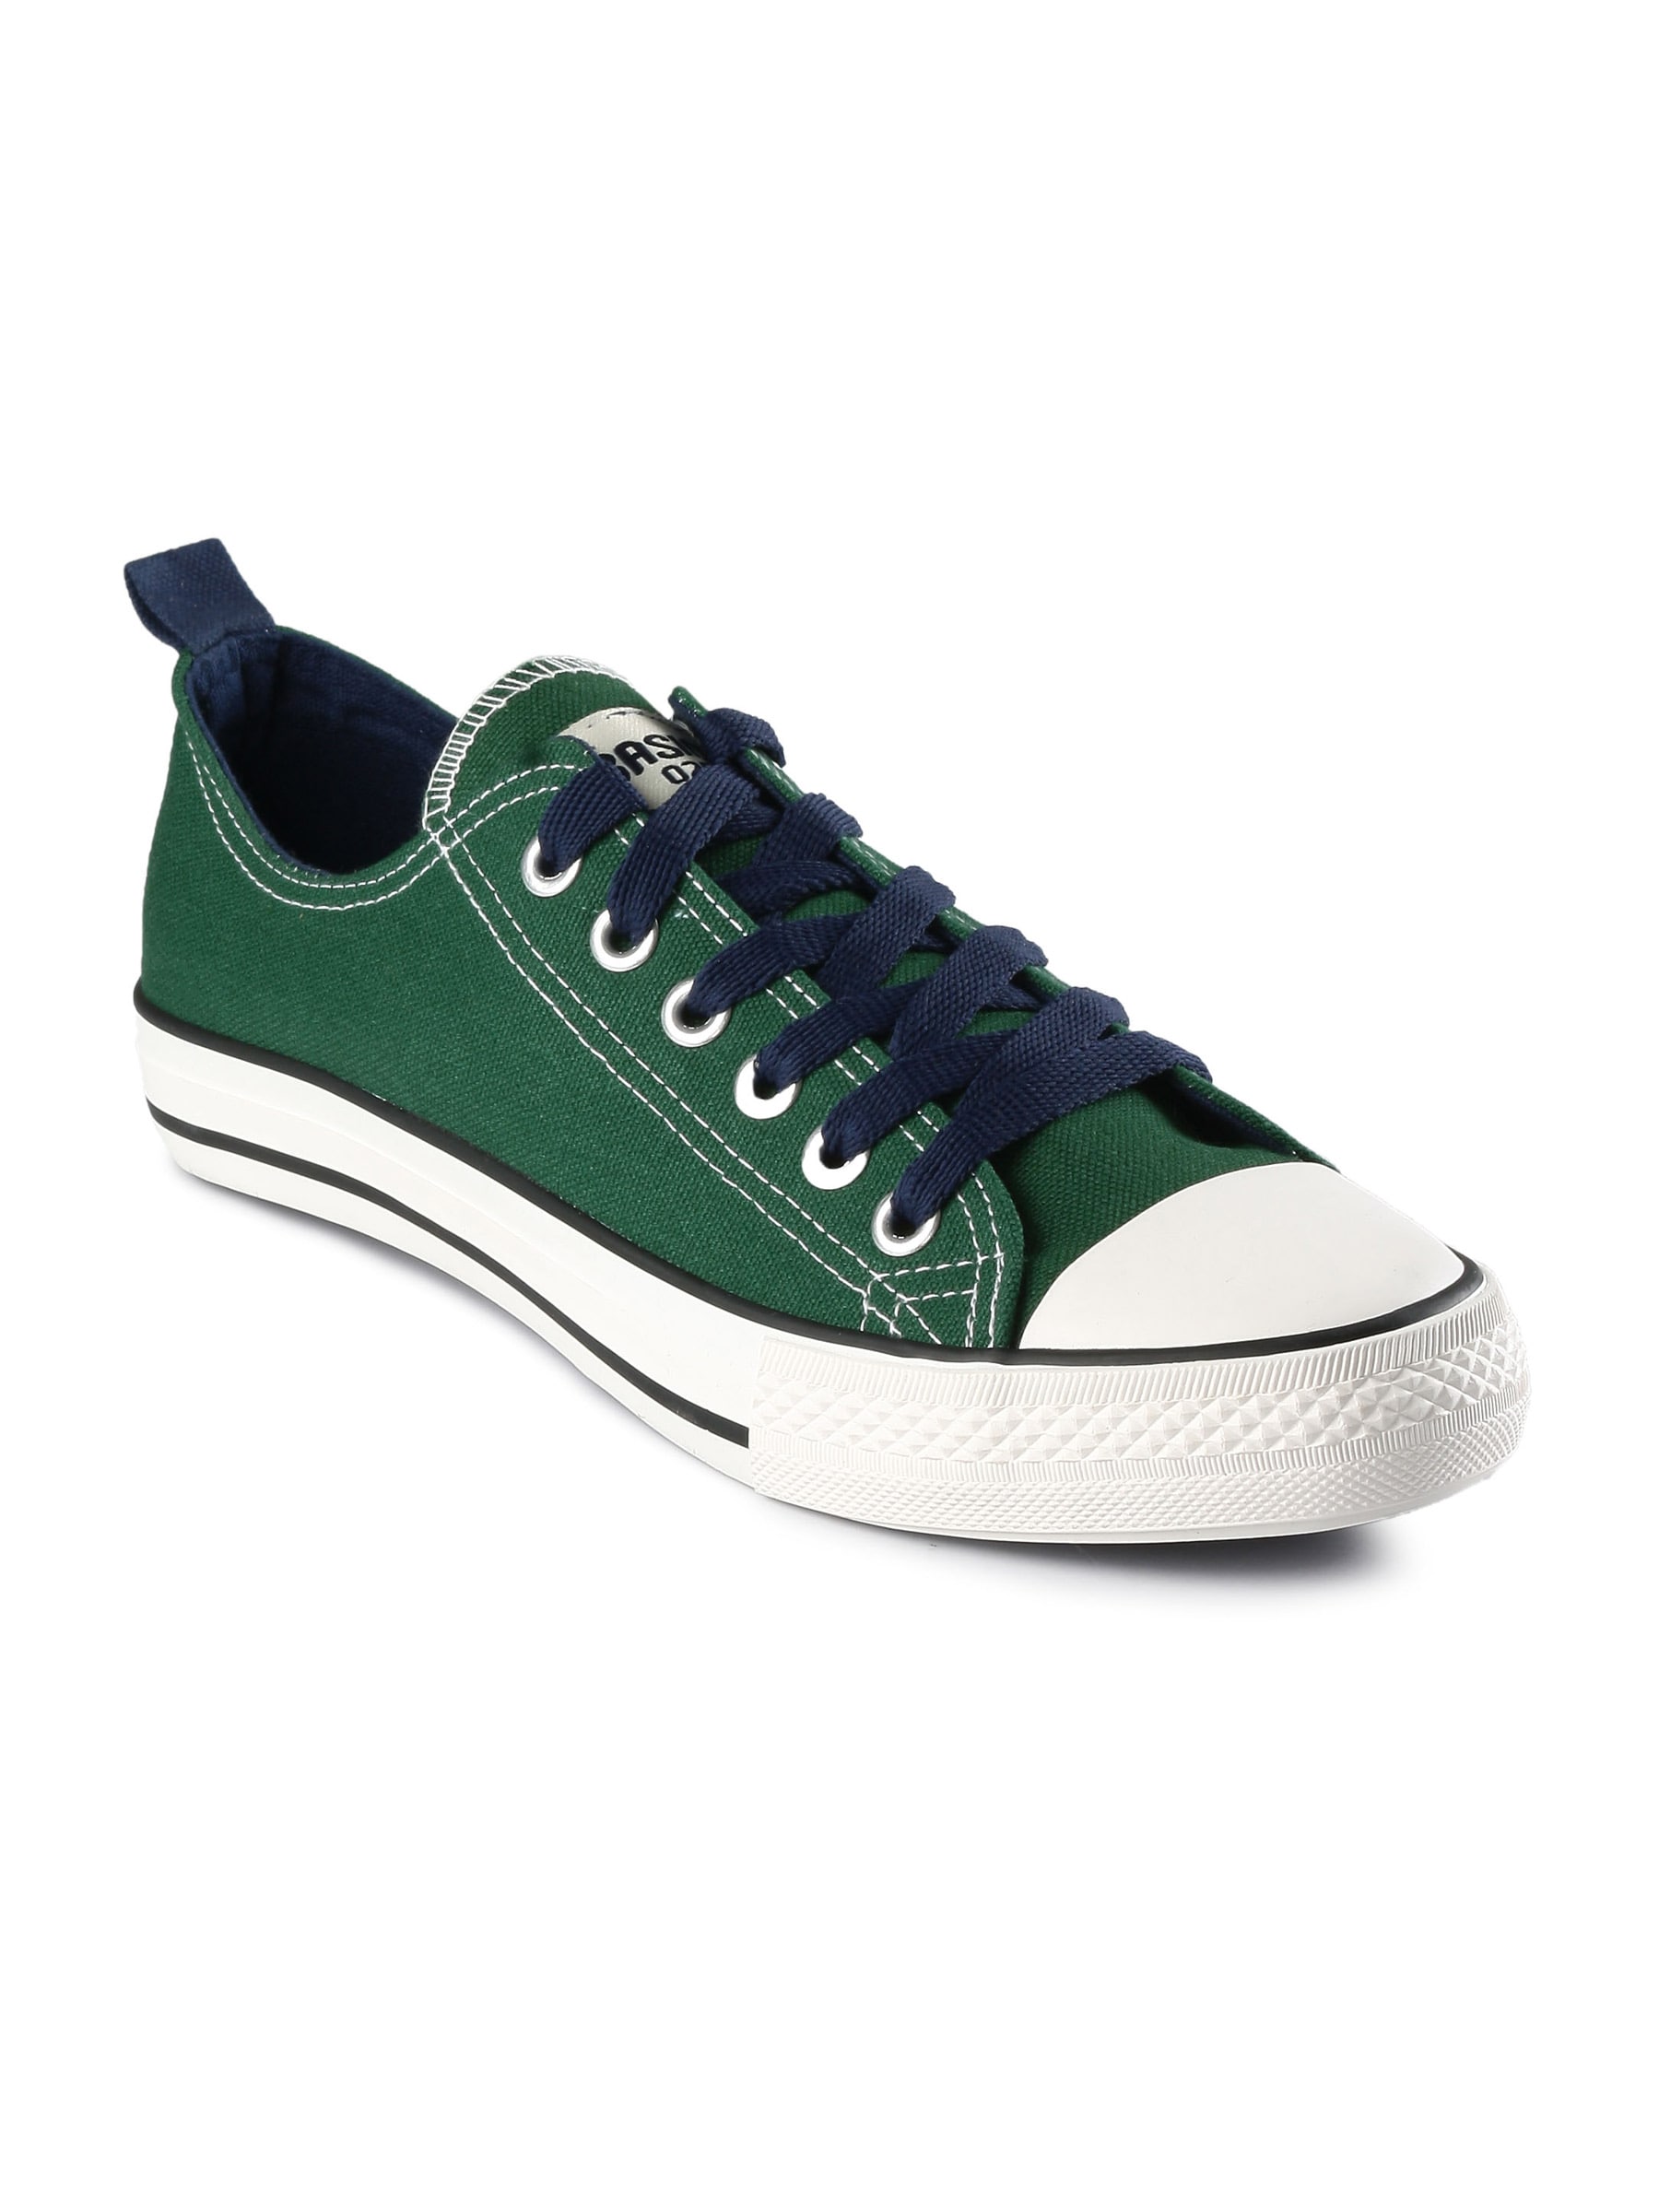 Basics Men Green Casual Shoes